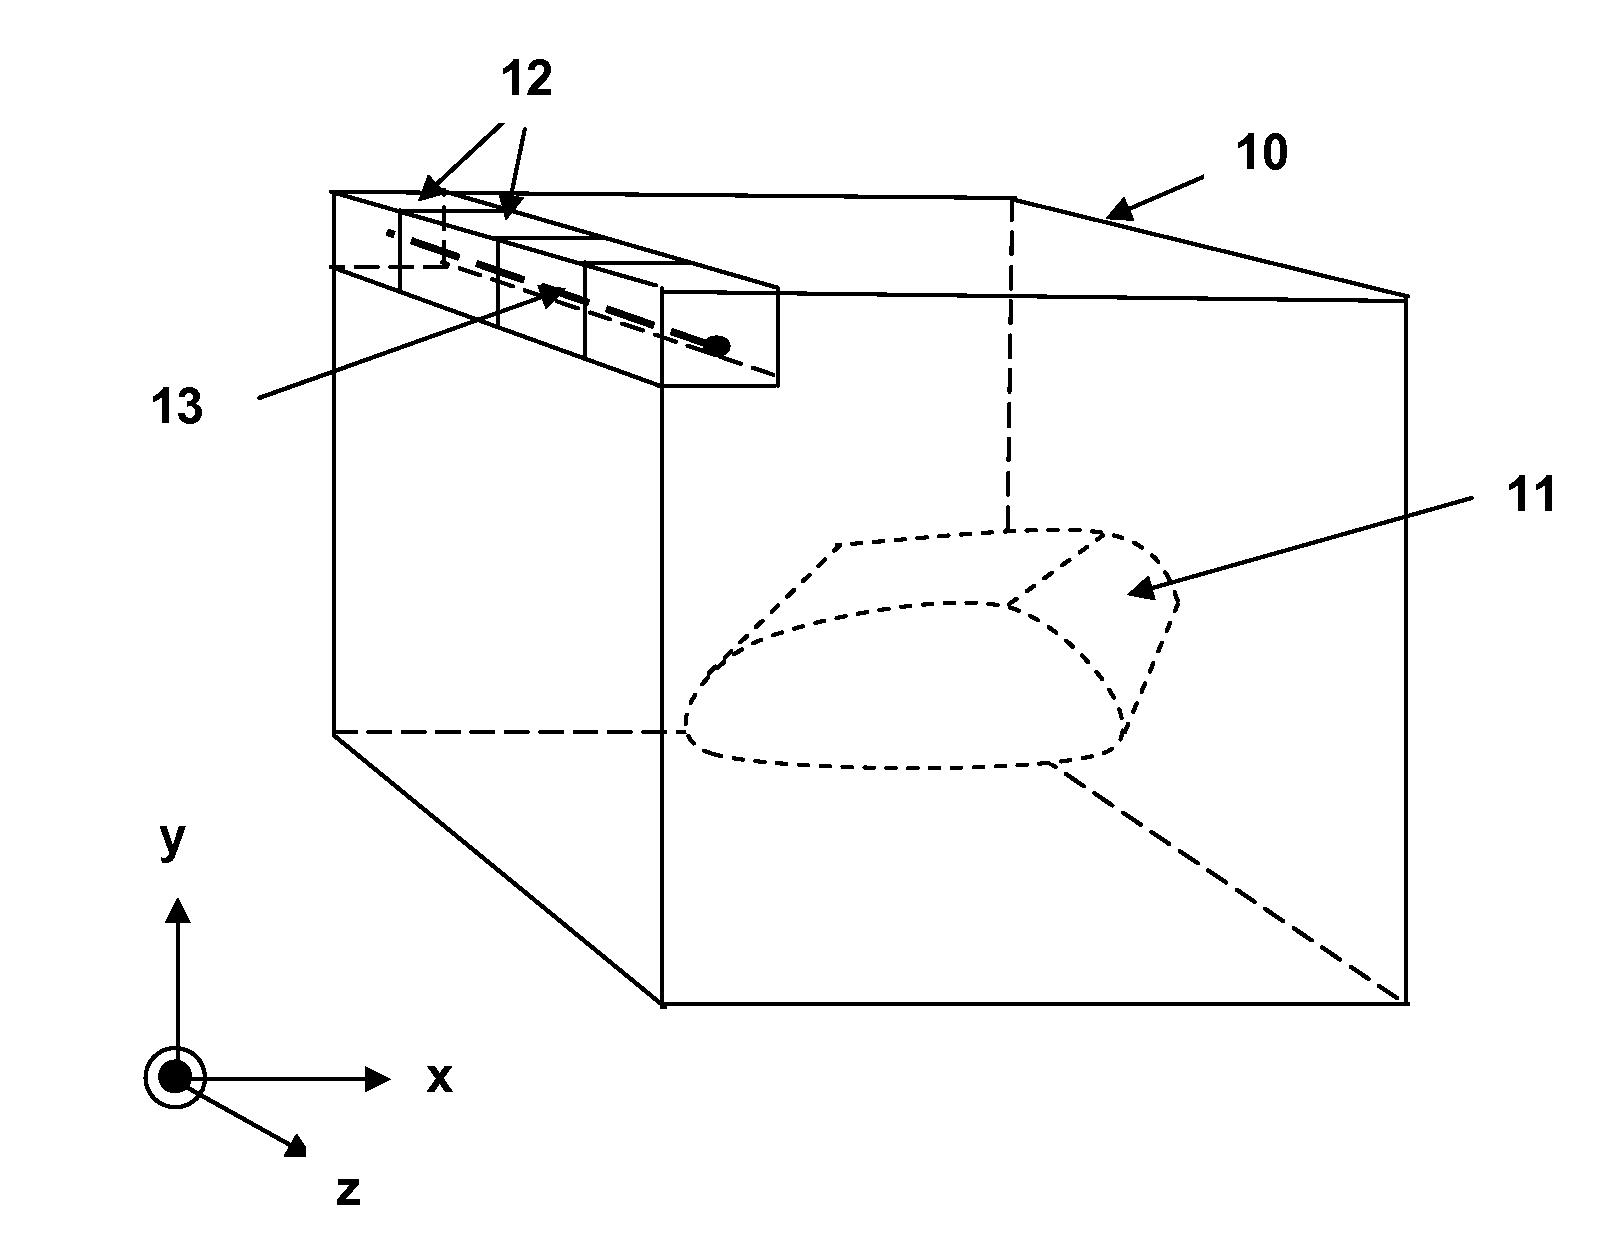 Cartesian mesh generation technique